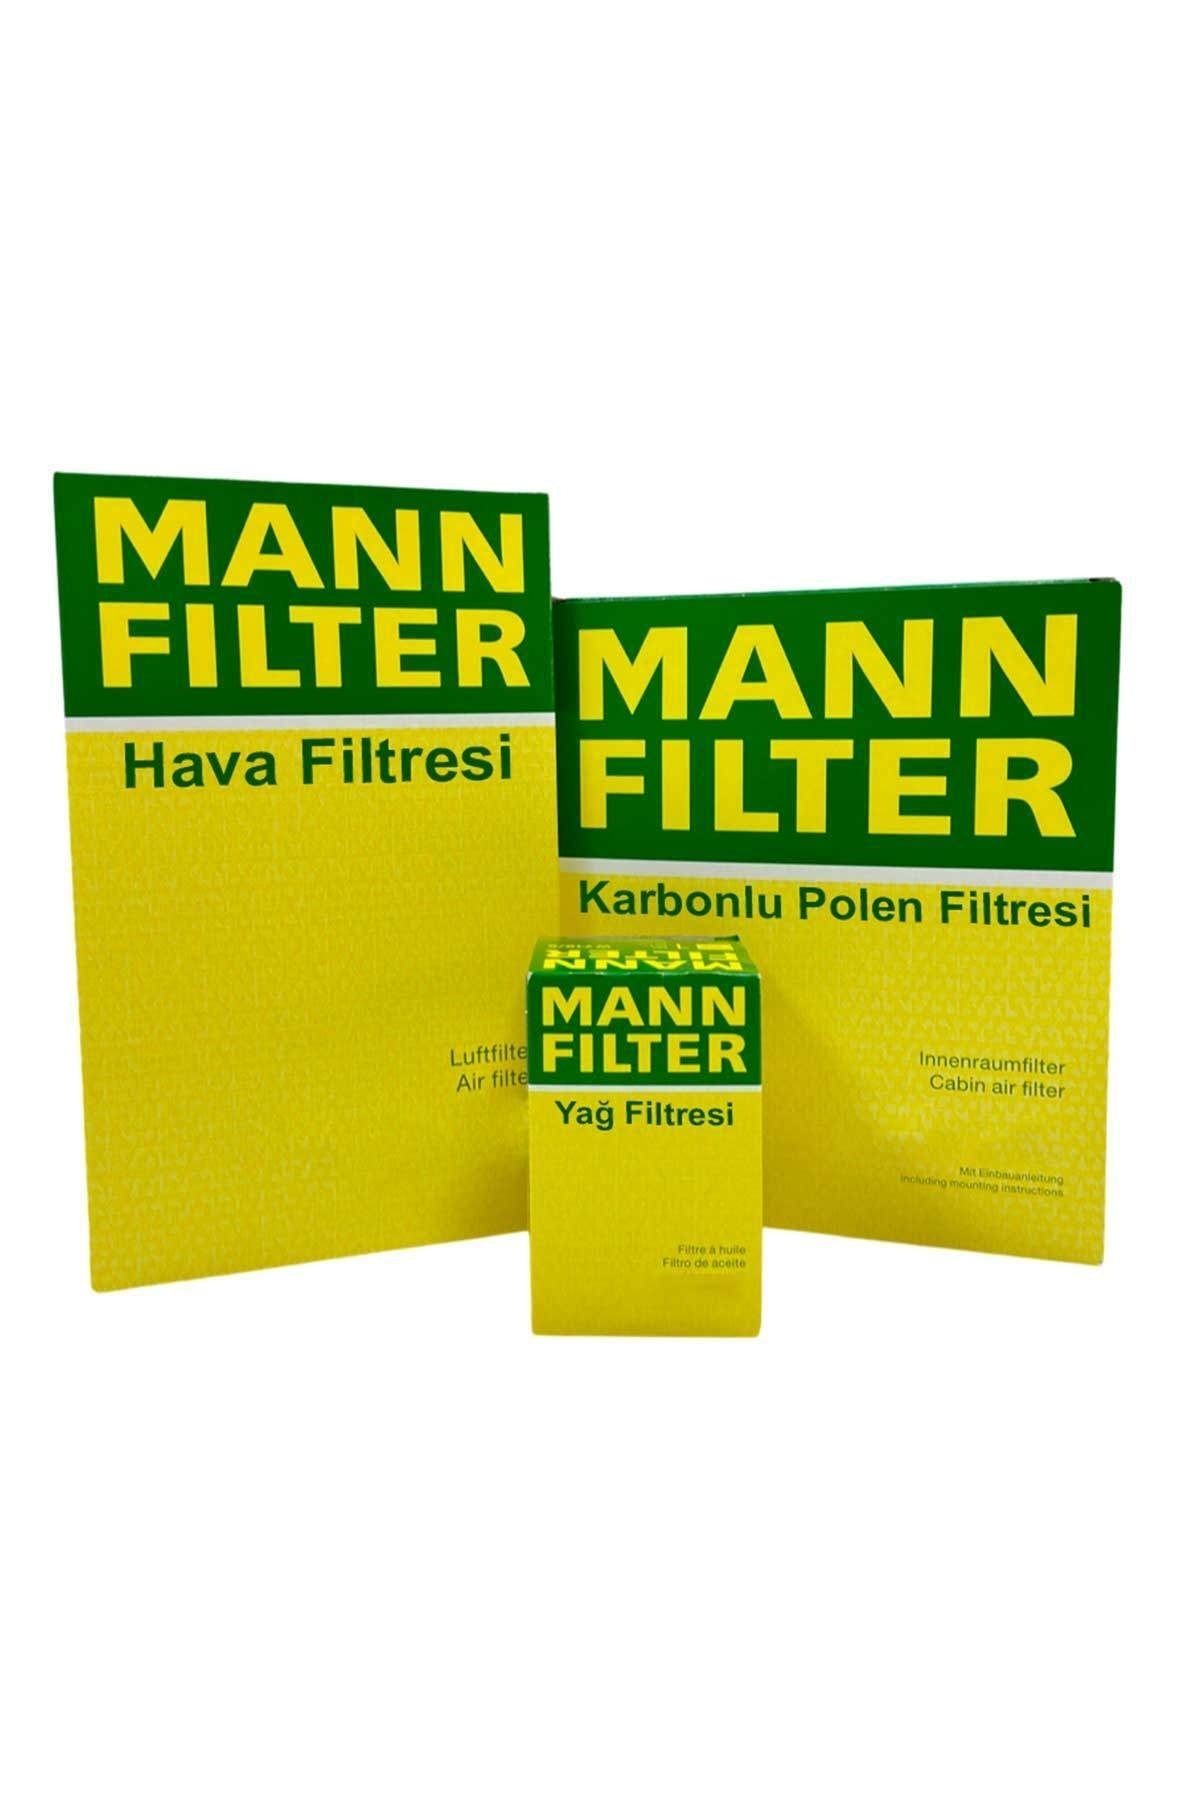 Mann Filter Uzmanparça Skoda Superb 1.4 Tsı Benzinli Mann Filtre Bakım Seti 2009-2014|hava+yağ+karbonlu Polen